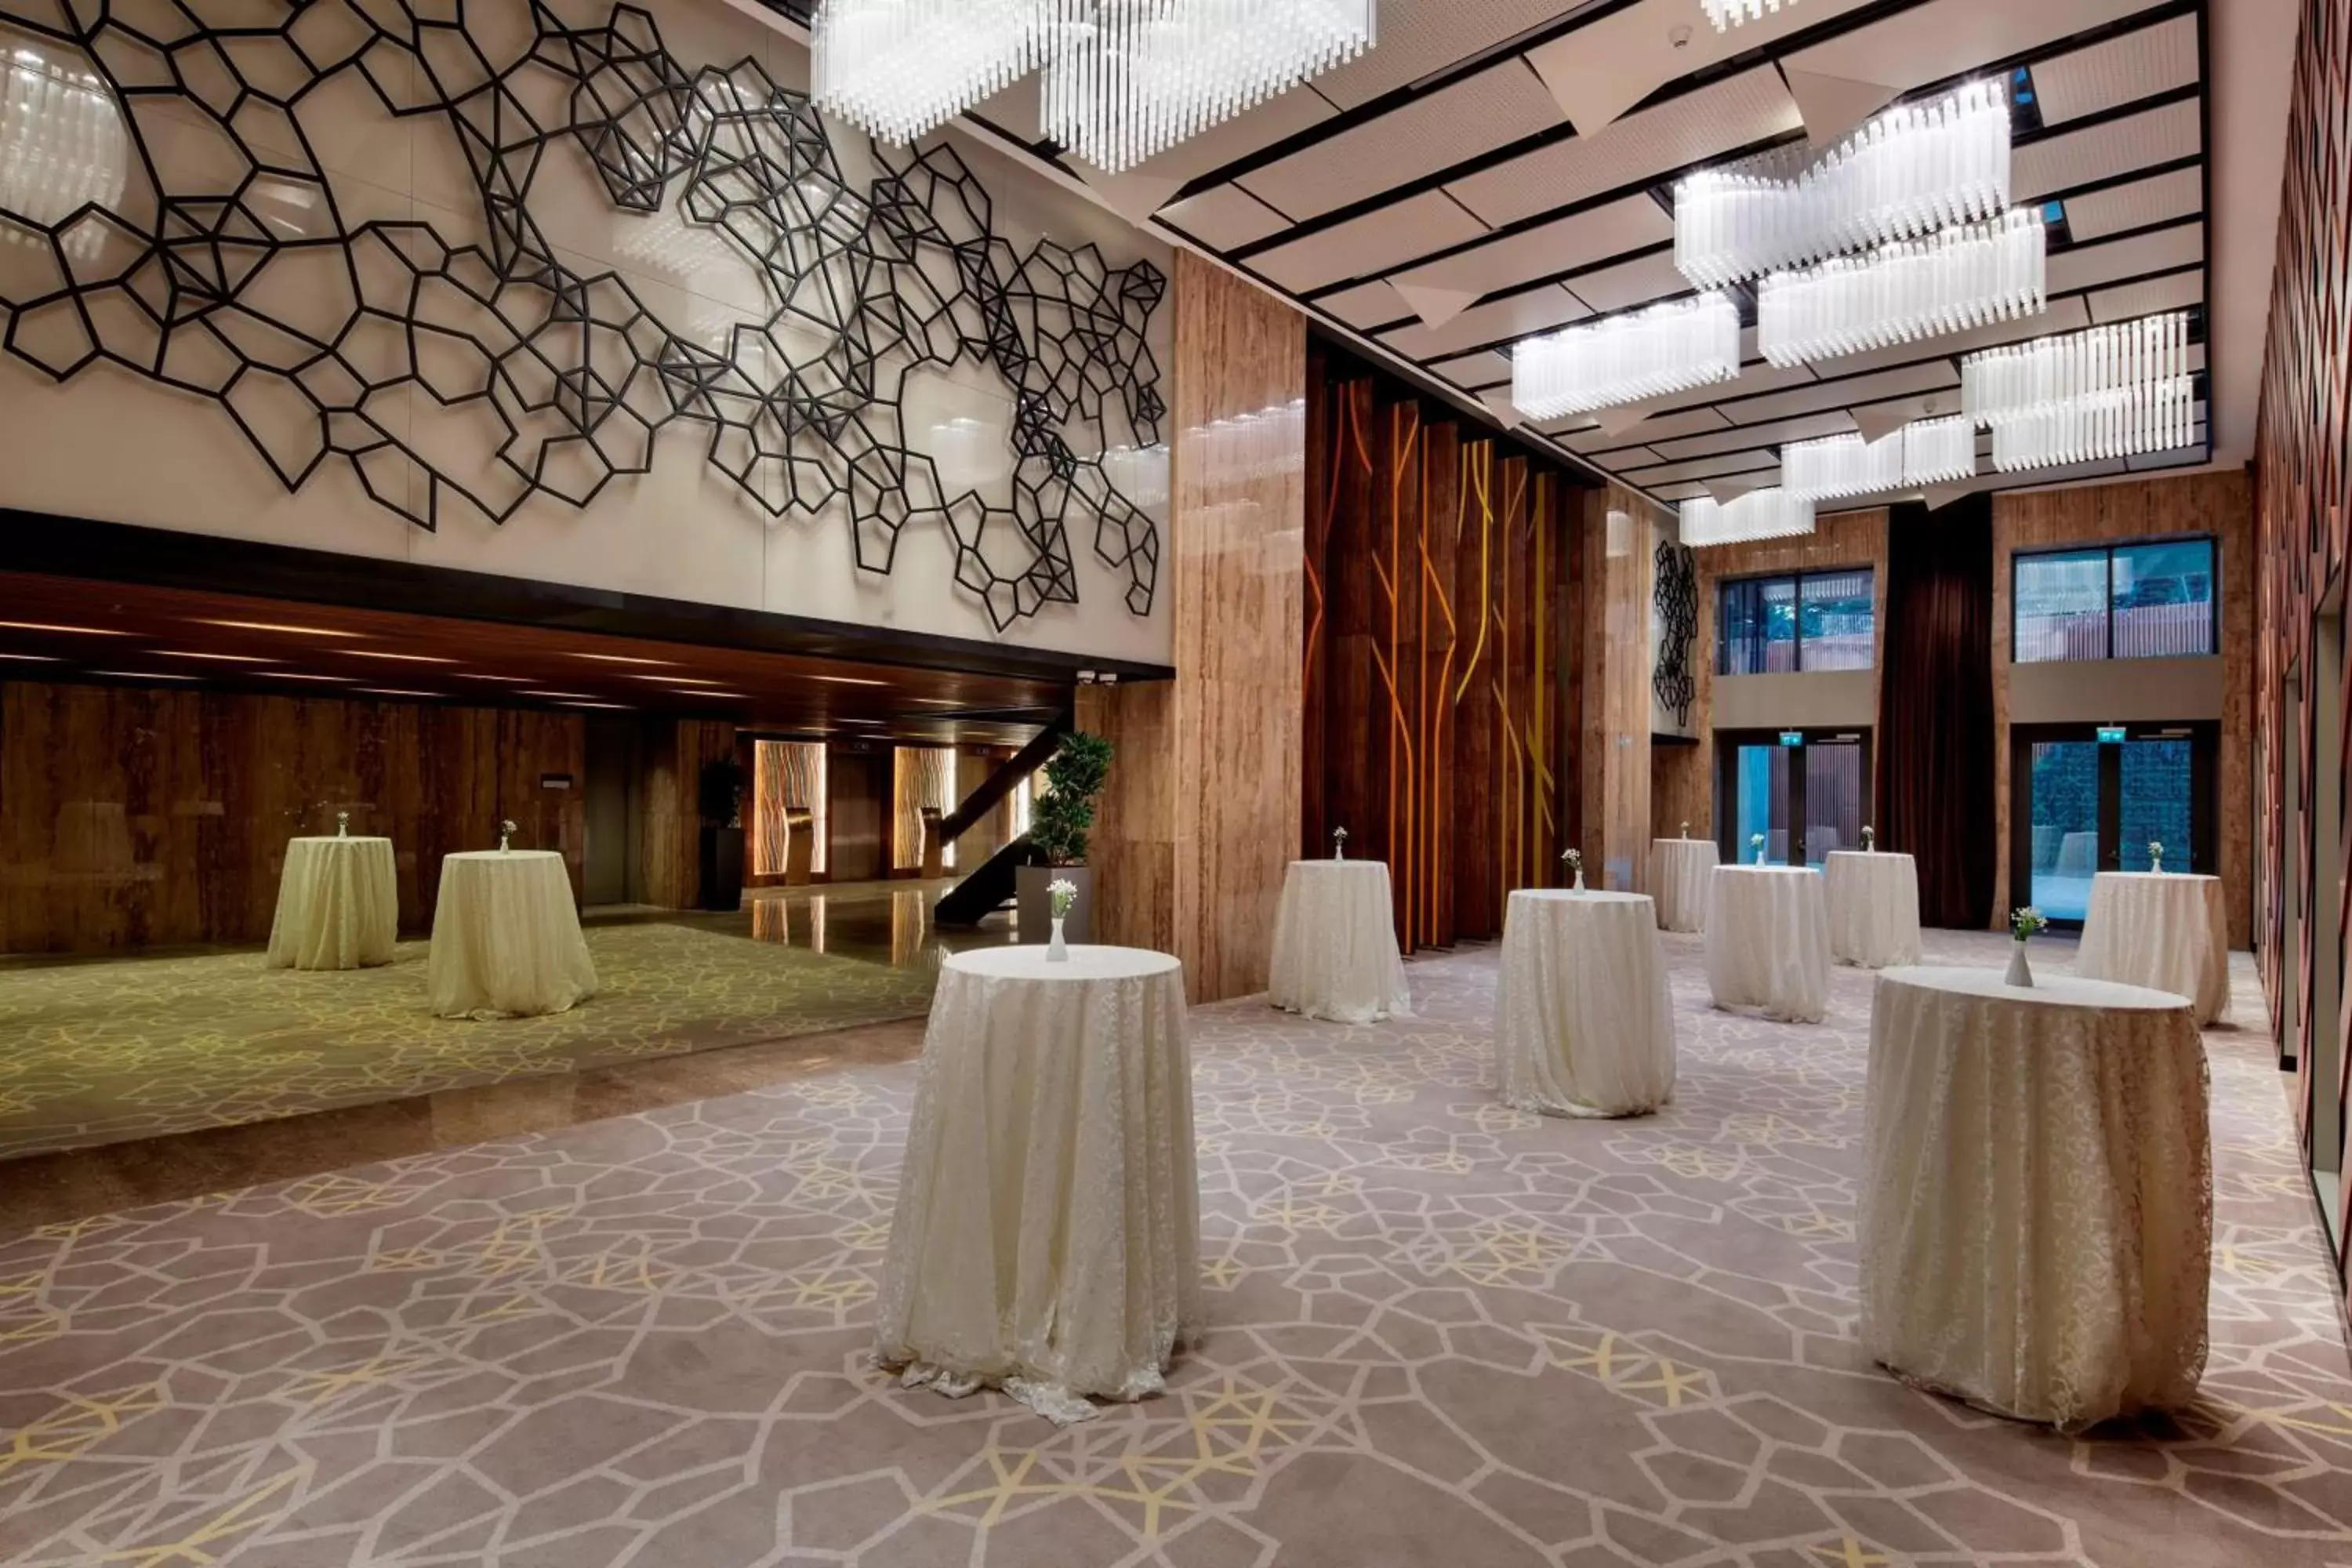 Meeting/conference room, Banquet Facilities in Hilton Garden Inn Istanbul Atatürk Airport